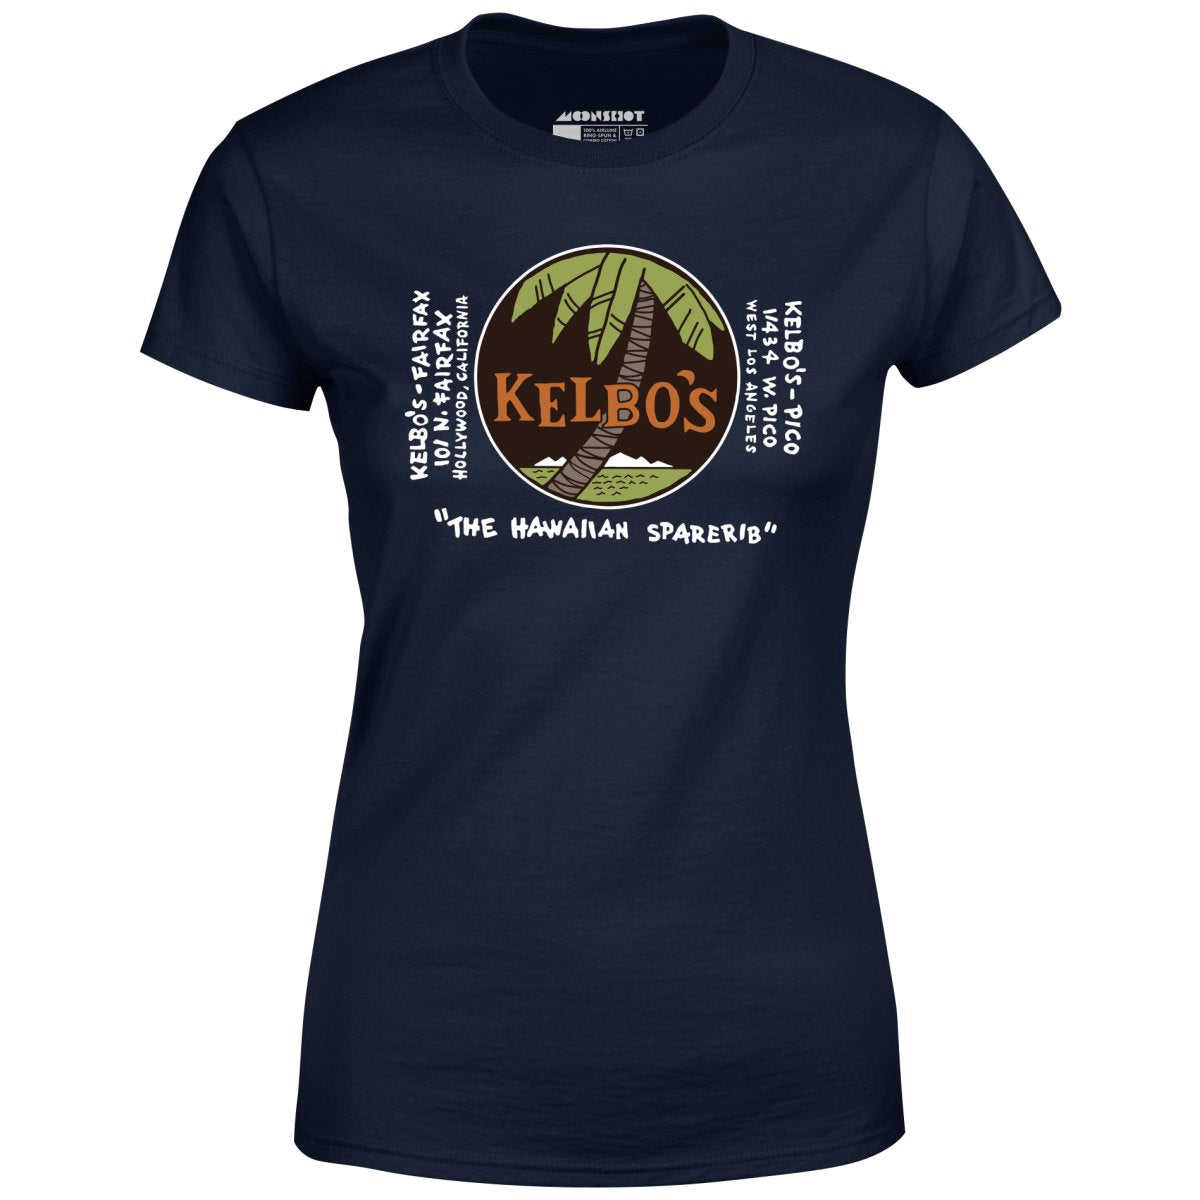 Kelbo's - Los Angeles, CA - Vintage Tiki Bar - Women's T-Shirt